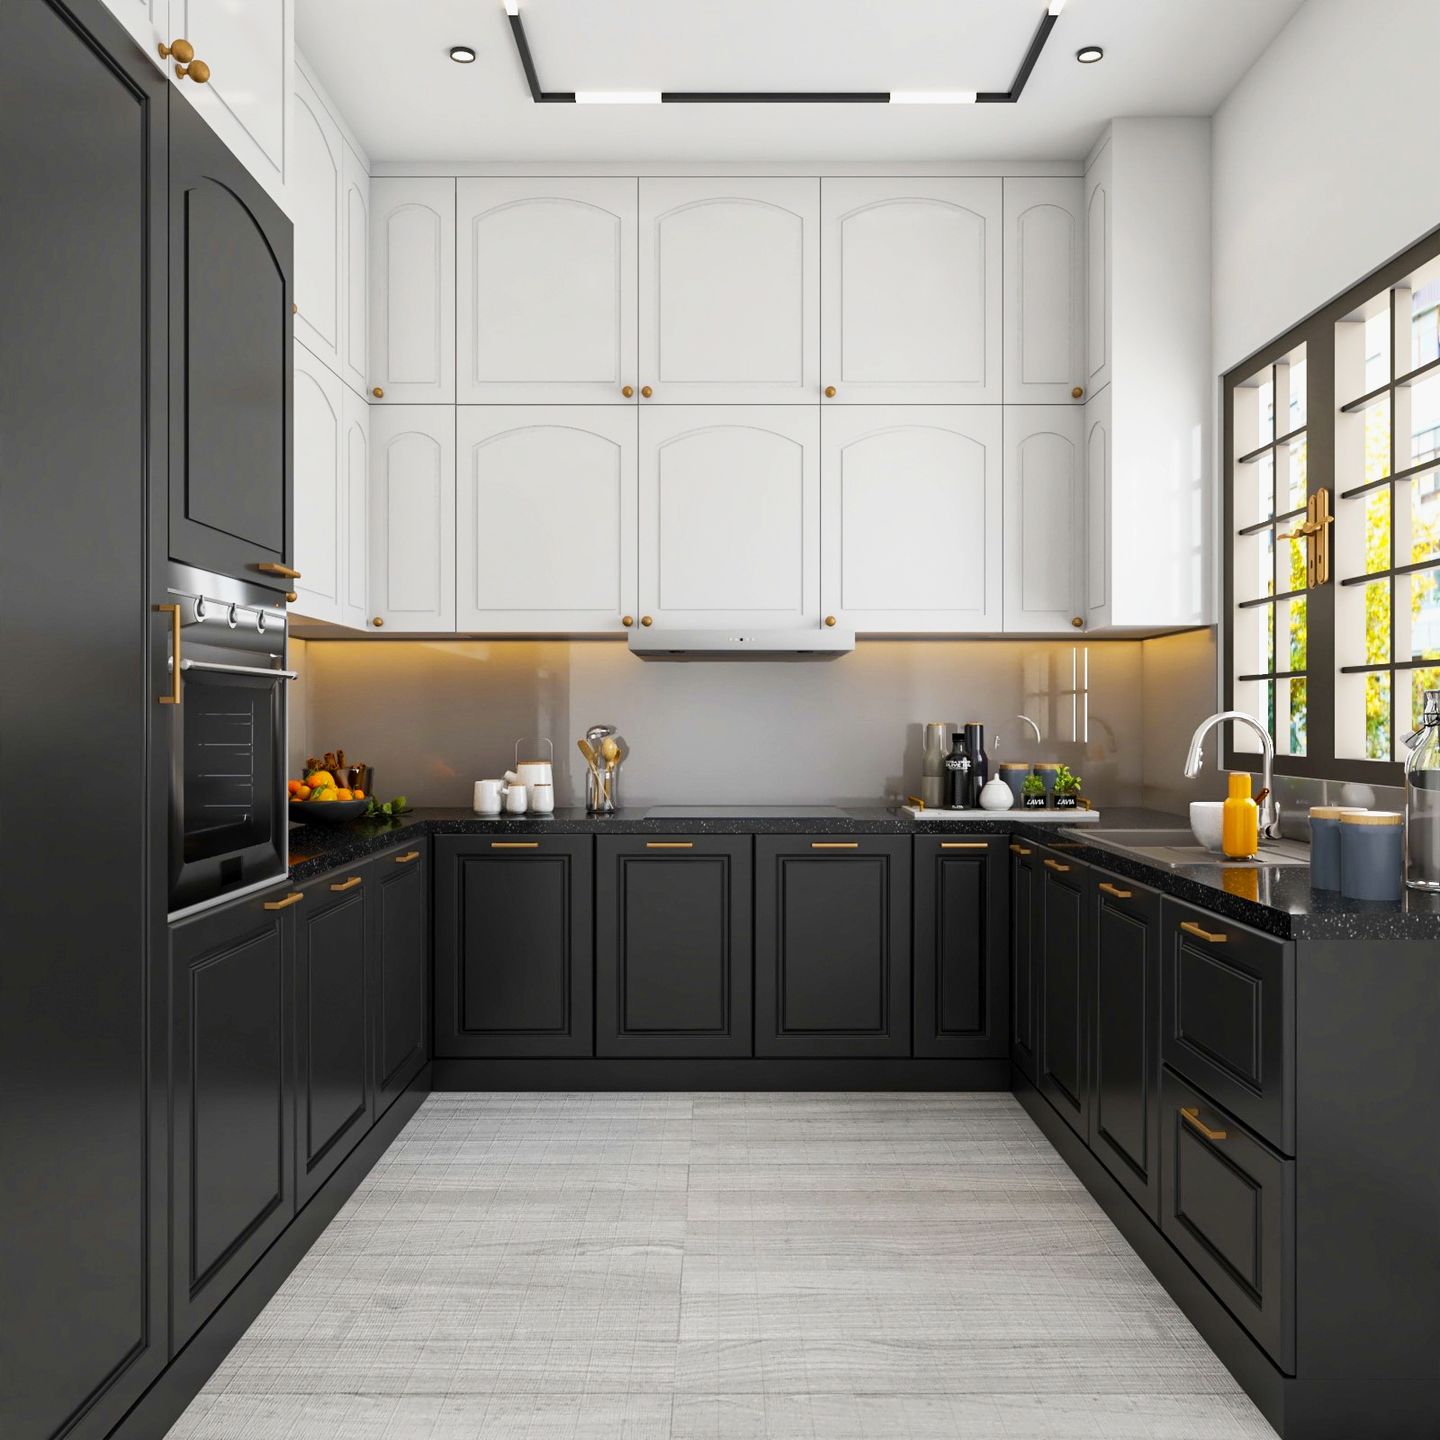 12x12 Ft  U-Shaped Modular Kitchen Design With Black Granite Countertop - Livspace